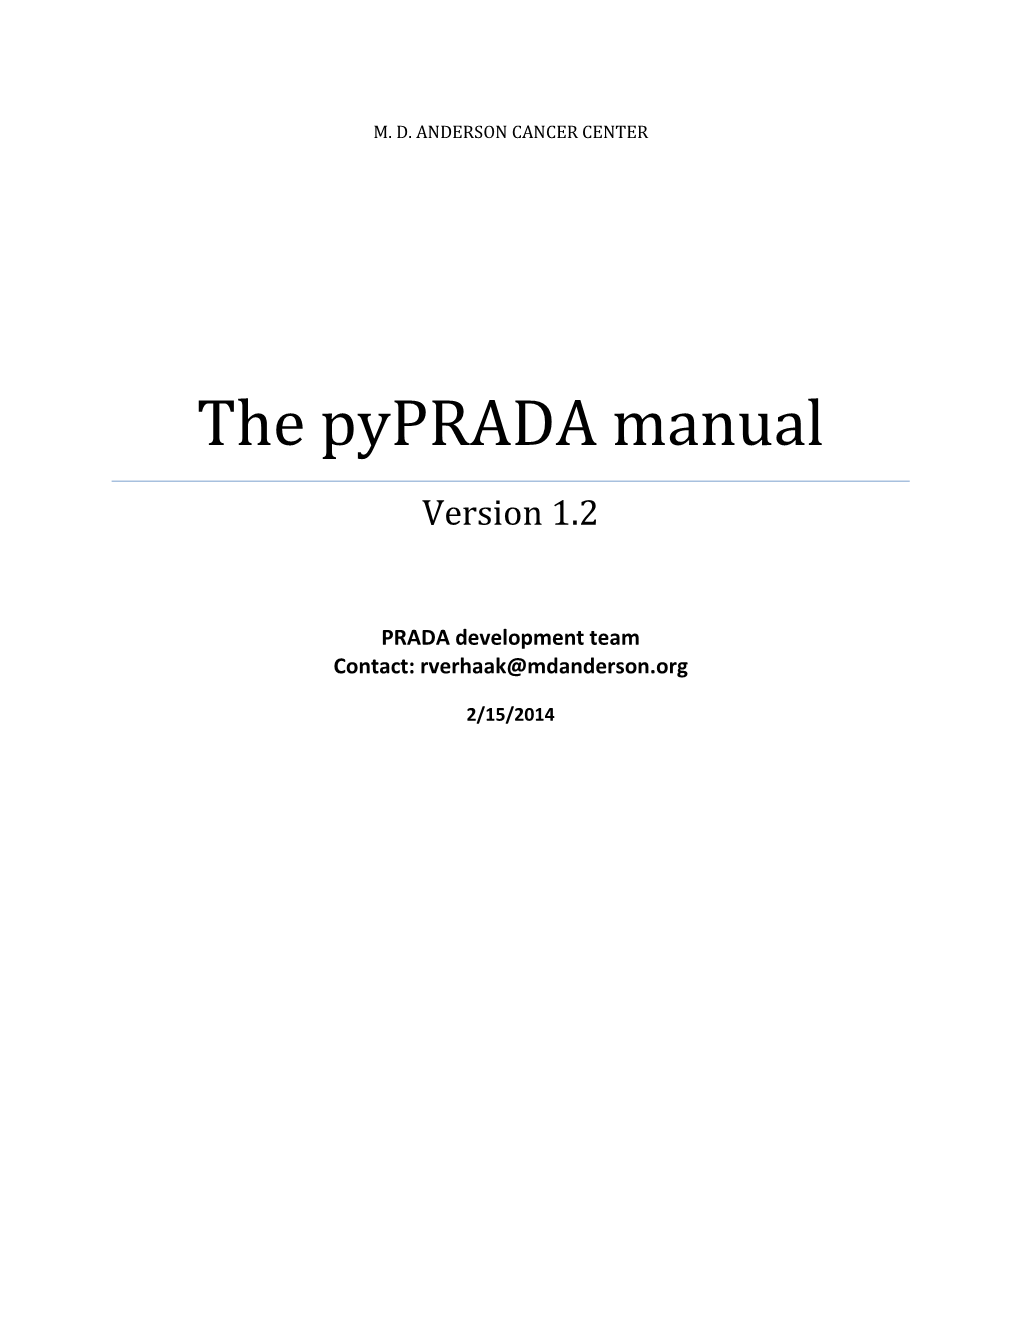 The Pyprada Manual Version 1.2